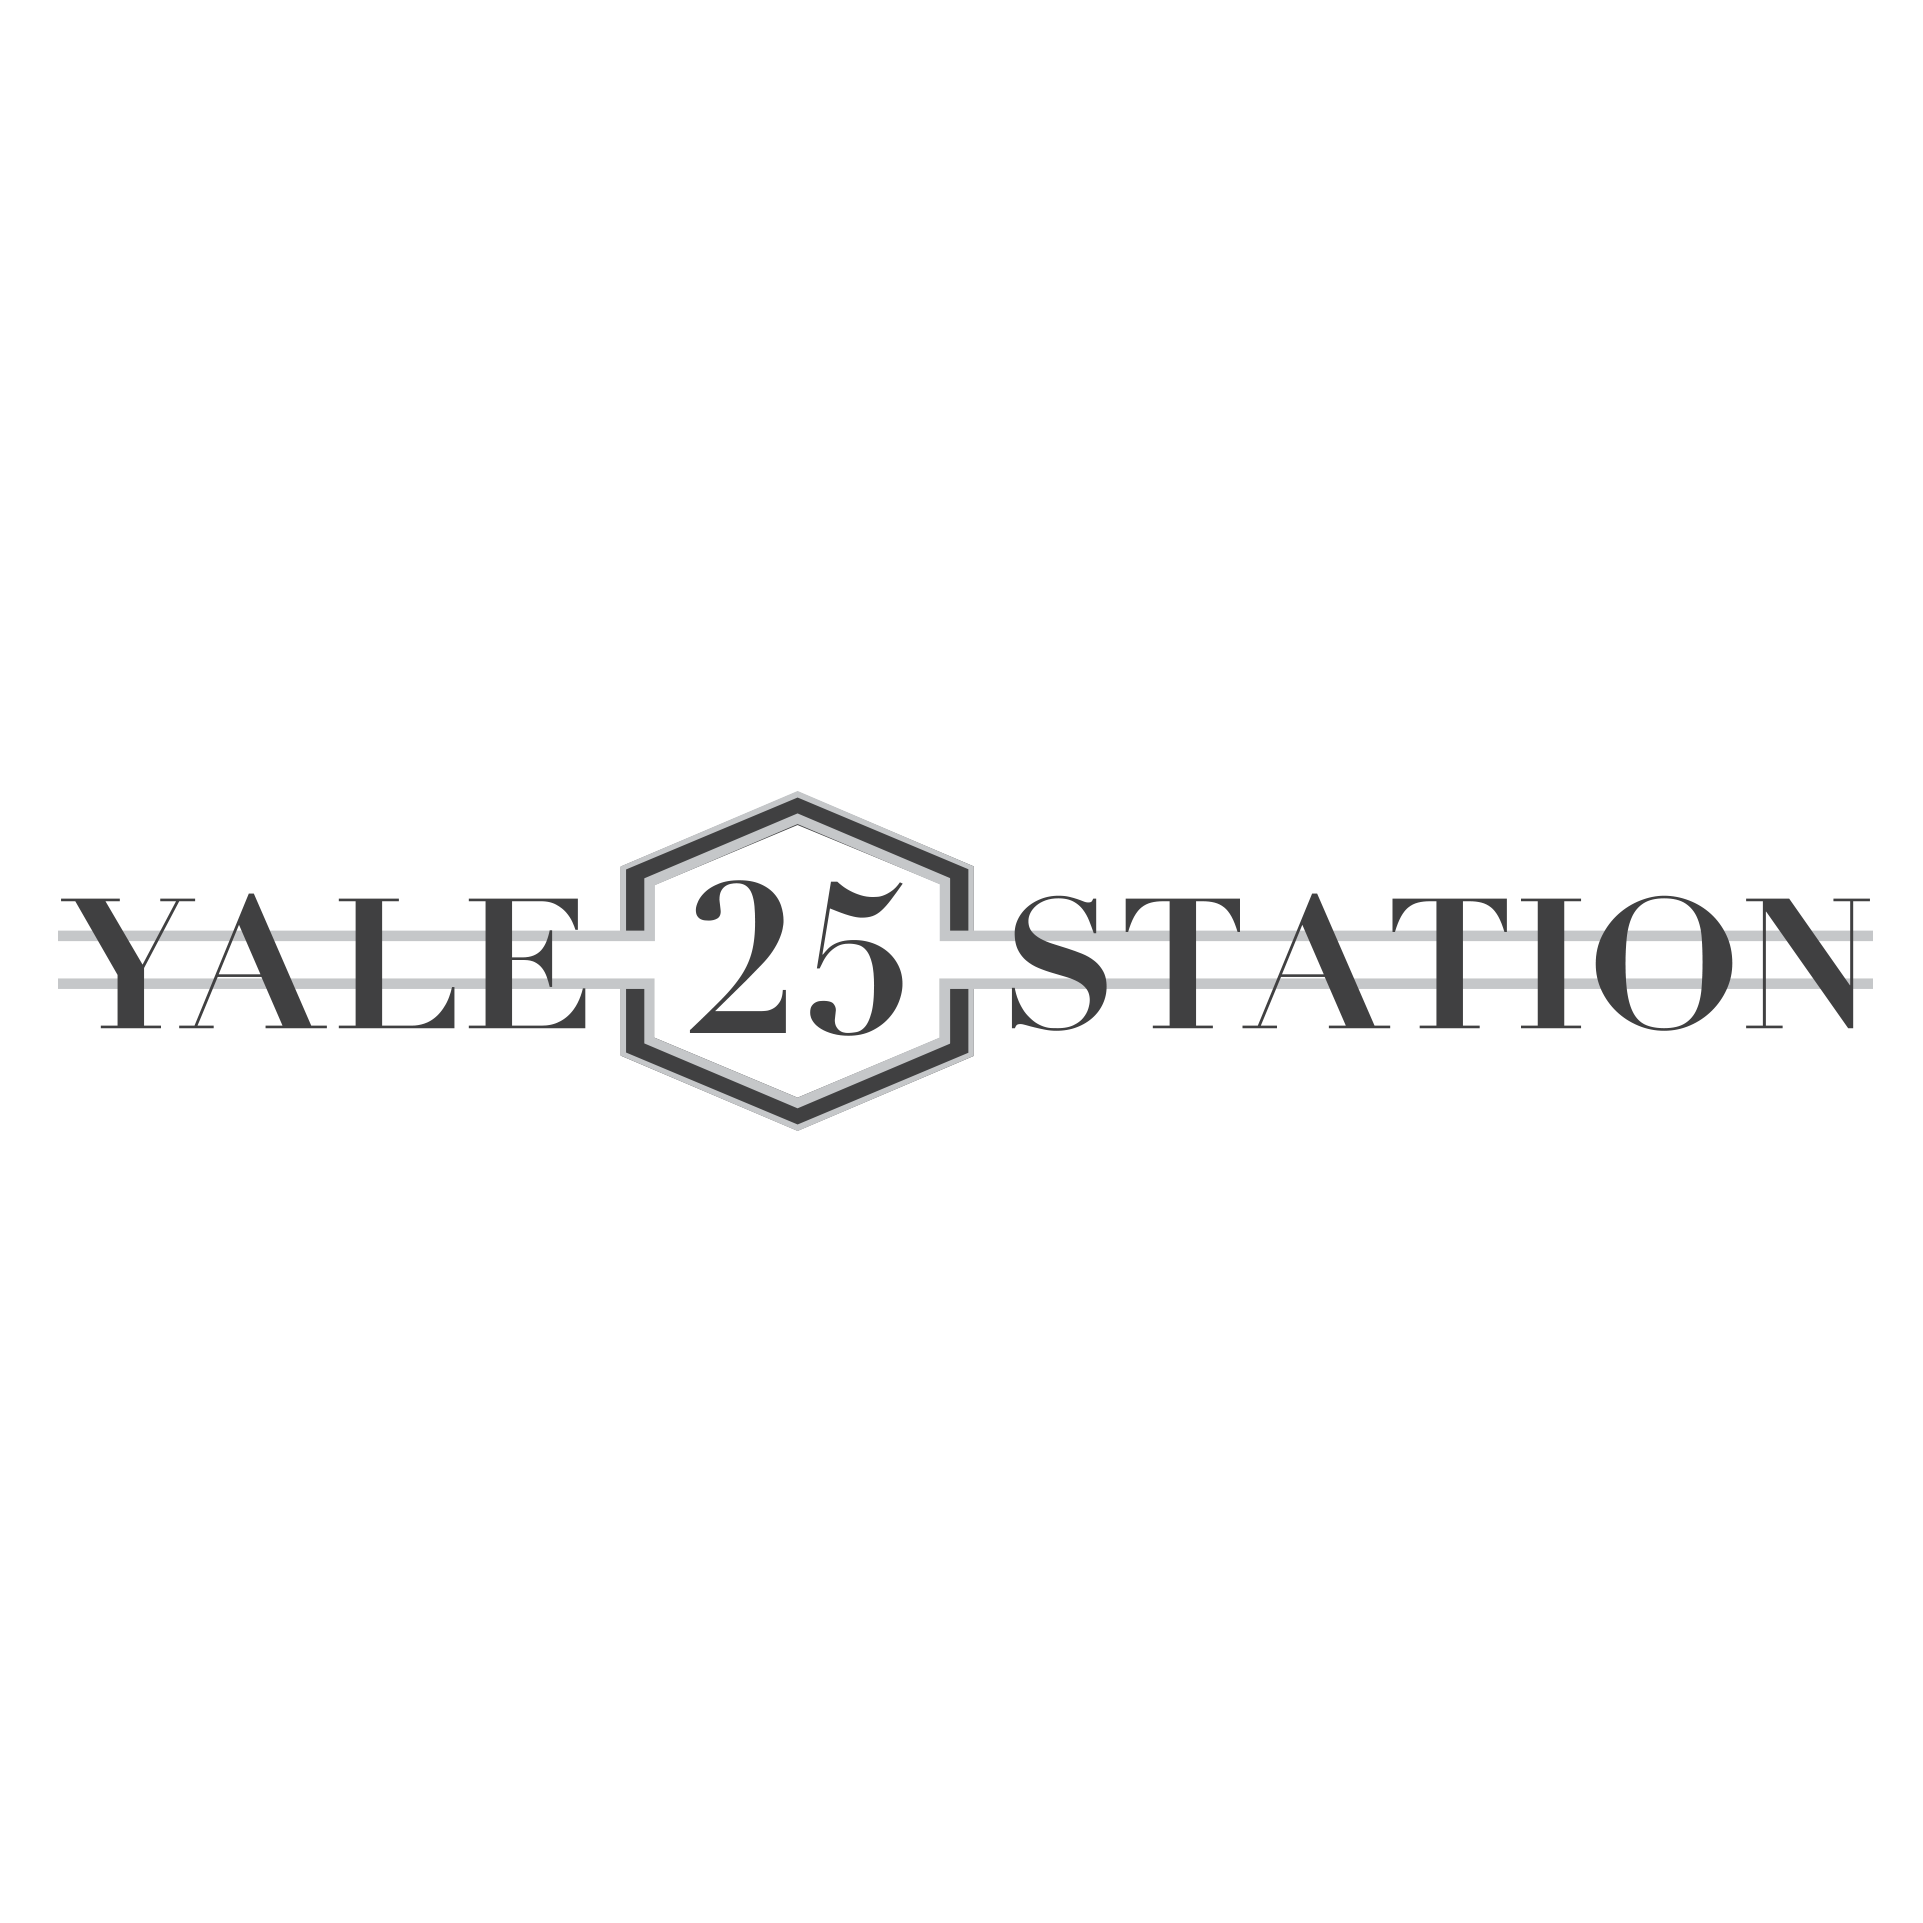 Yale 25 Station - Denver, CO 80222 - (303)395-5220 | ShowMeLocal.com